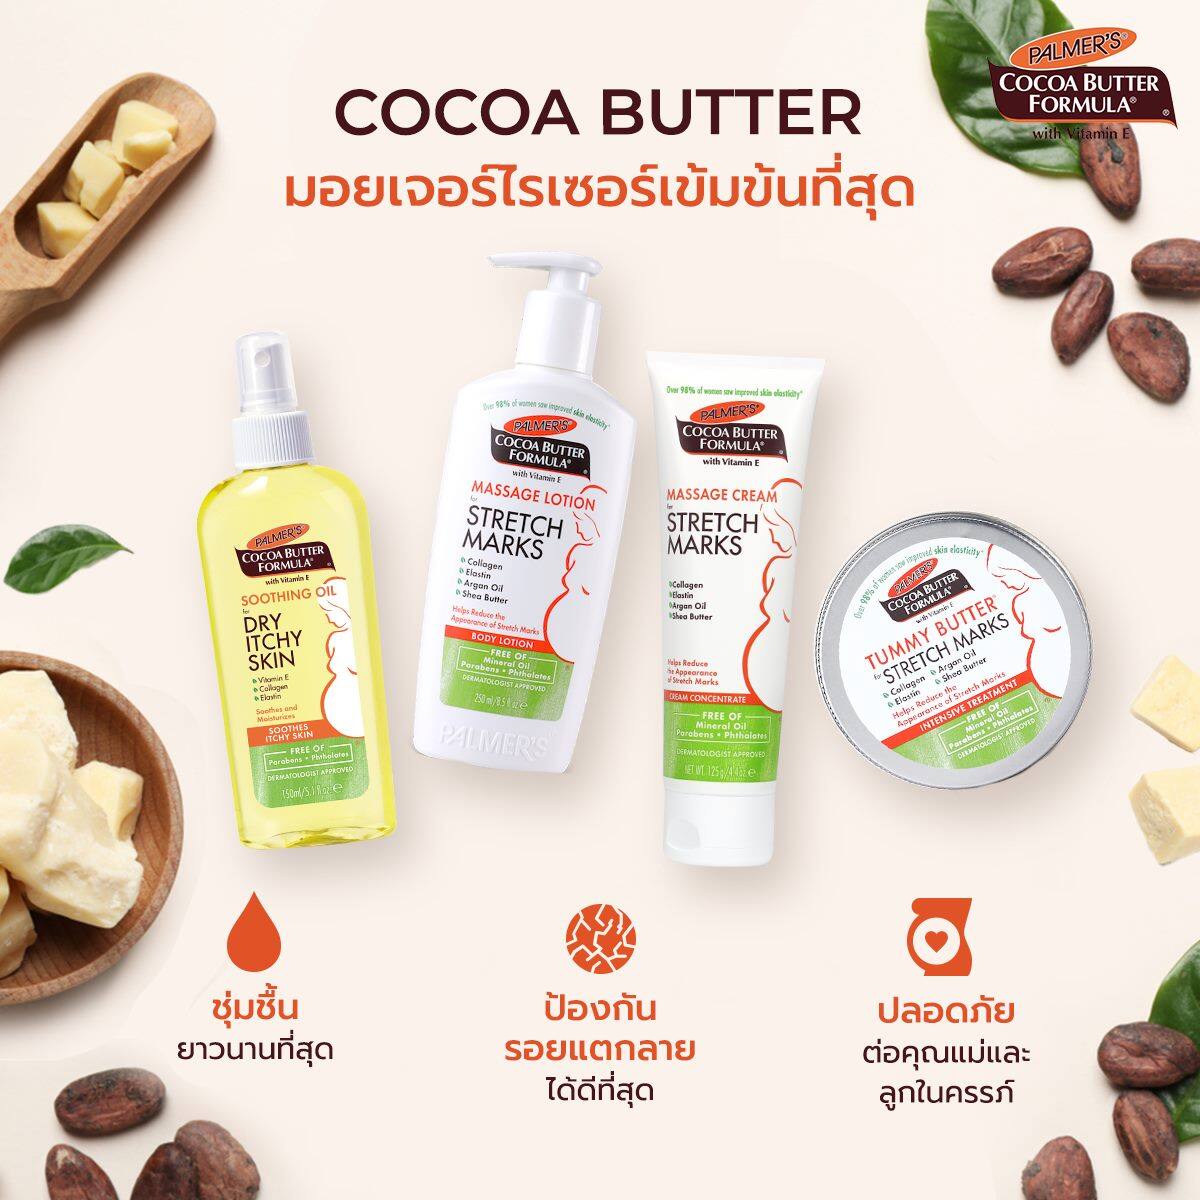 Palmer 's Cocoa Butter Cream 125 g. ปาล์มเมอร์ เนื้อครีมเข้มข้นดูแลผิวแตกลายเป็นพิเศษ ปลอดภัยต่อลูกน้อยในครรภ์ ครีมทาท้องลาย  ครีมทา ท้องแตกลาย